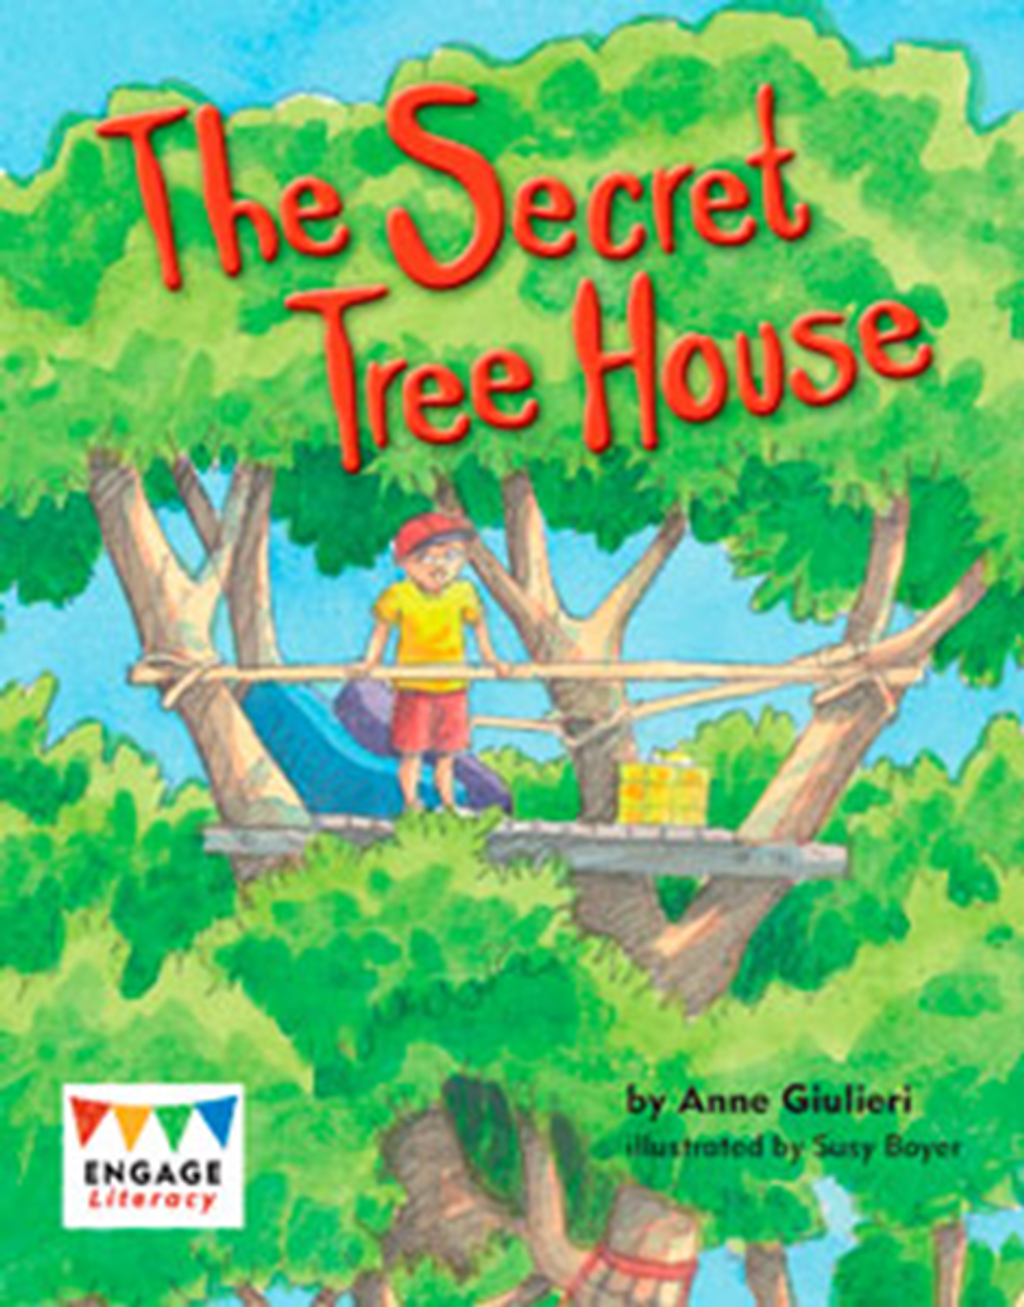 the secret tree house